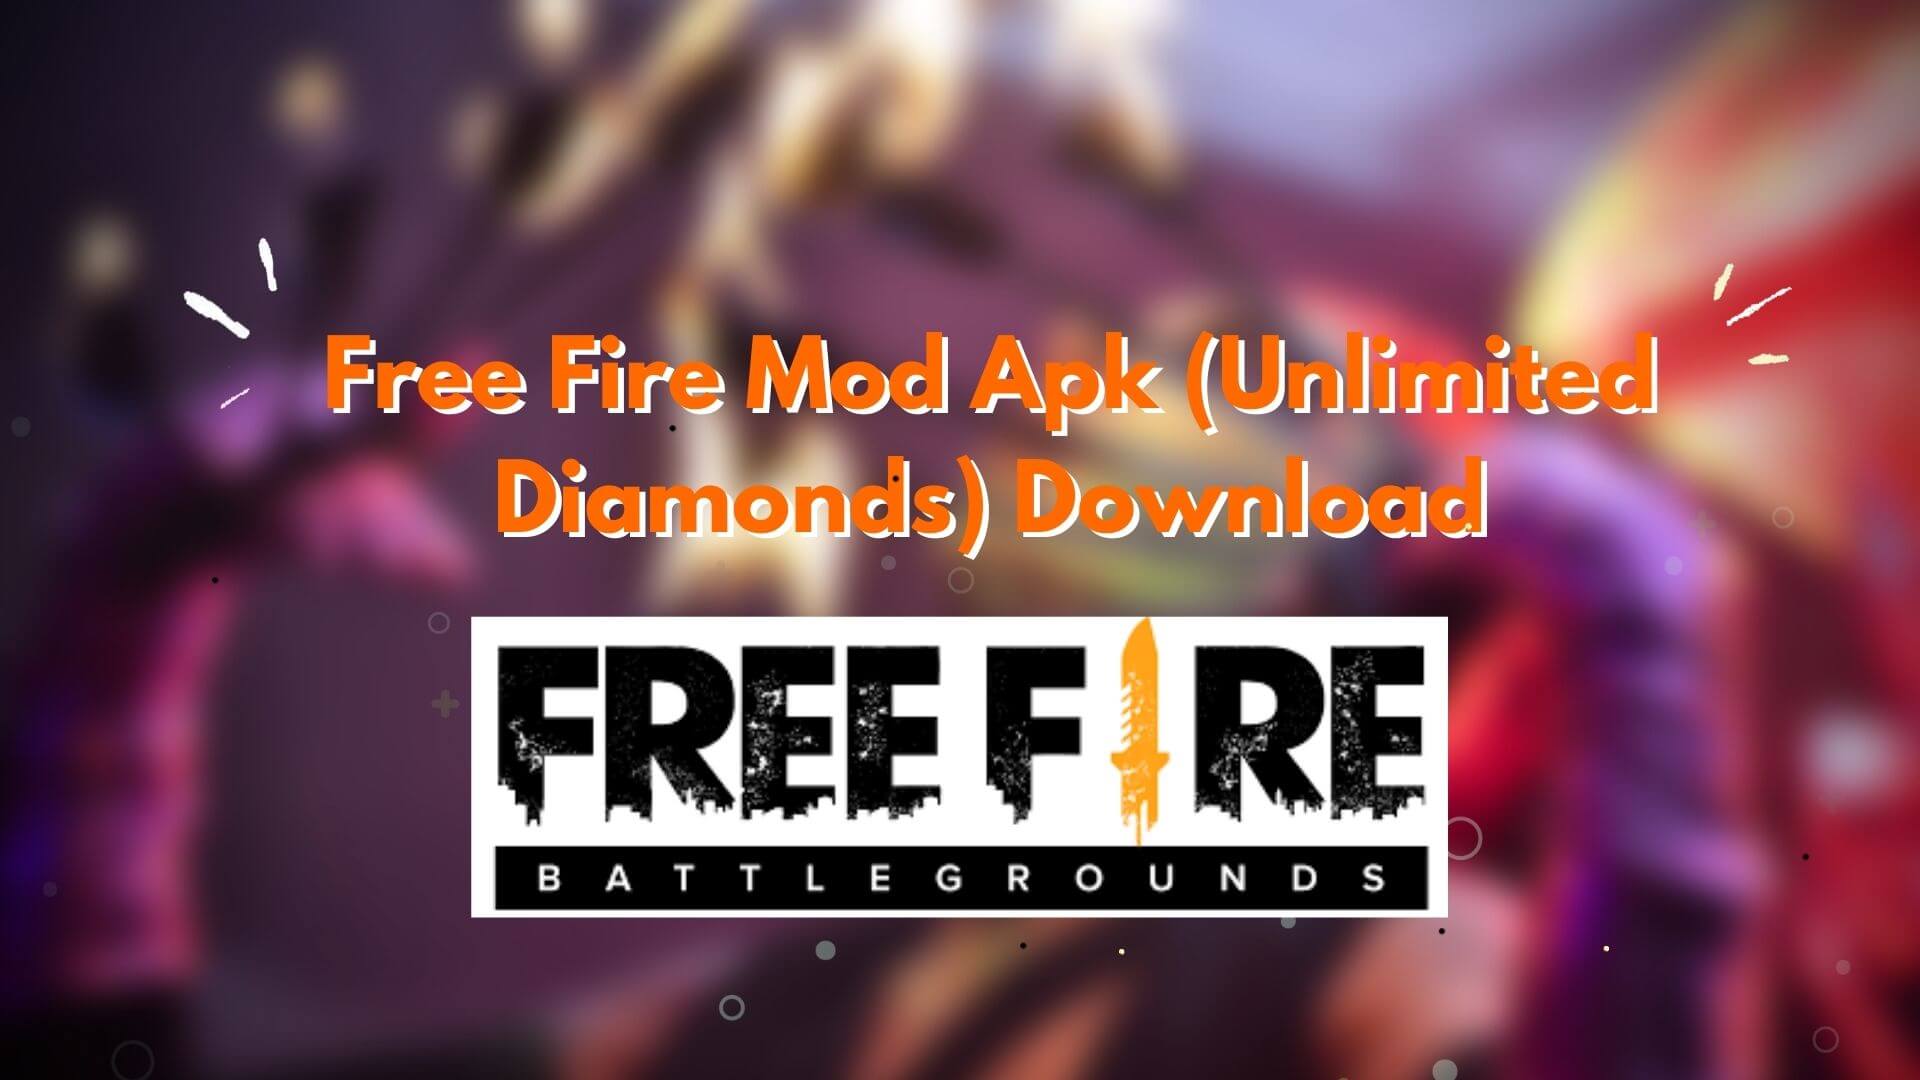 Free Fire Mod Apk (Unlimited Diamonds): Download Garena Free Fire Mod Apk 2022